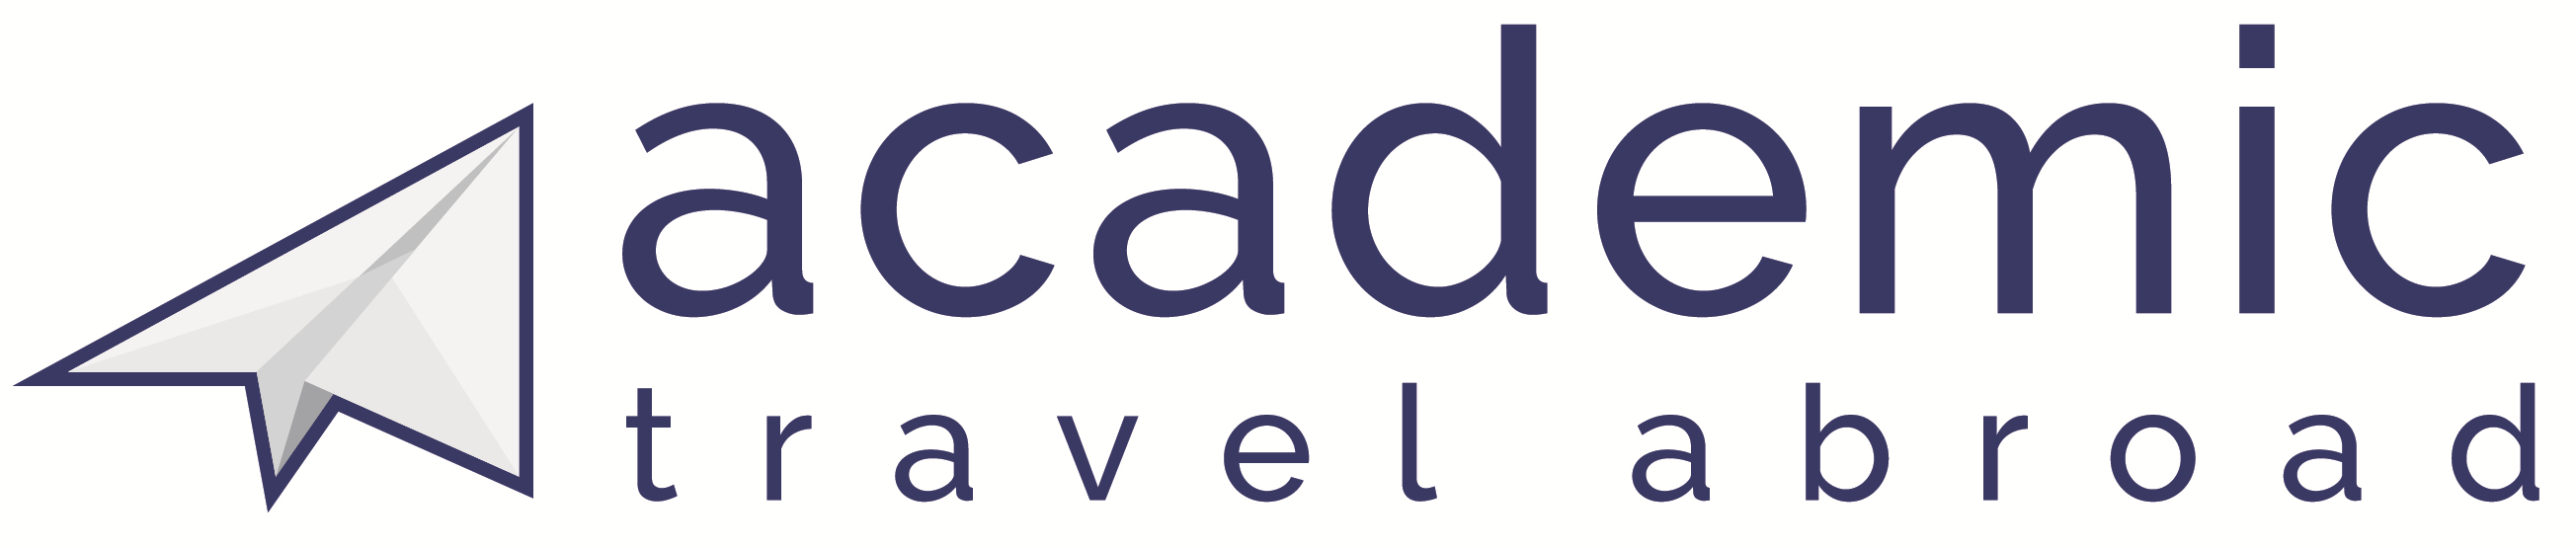 Academic Travel Abroad Company Logo